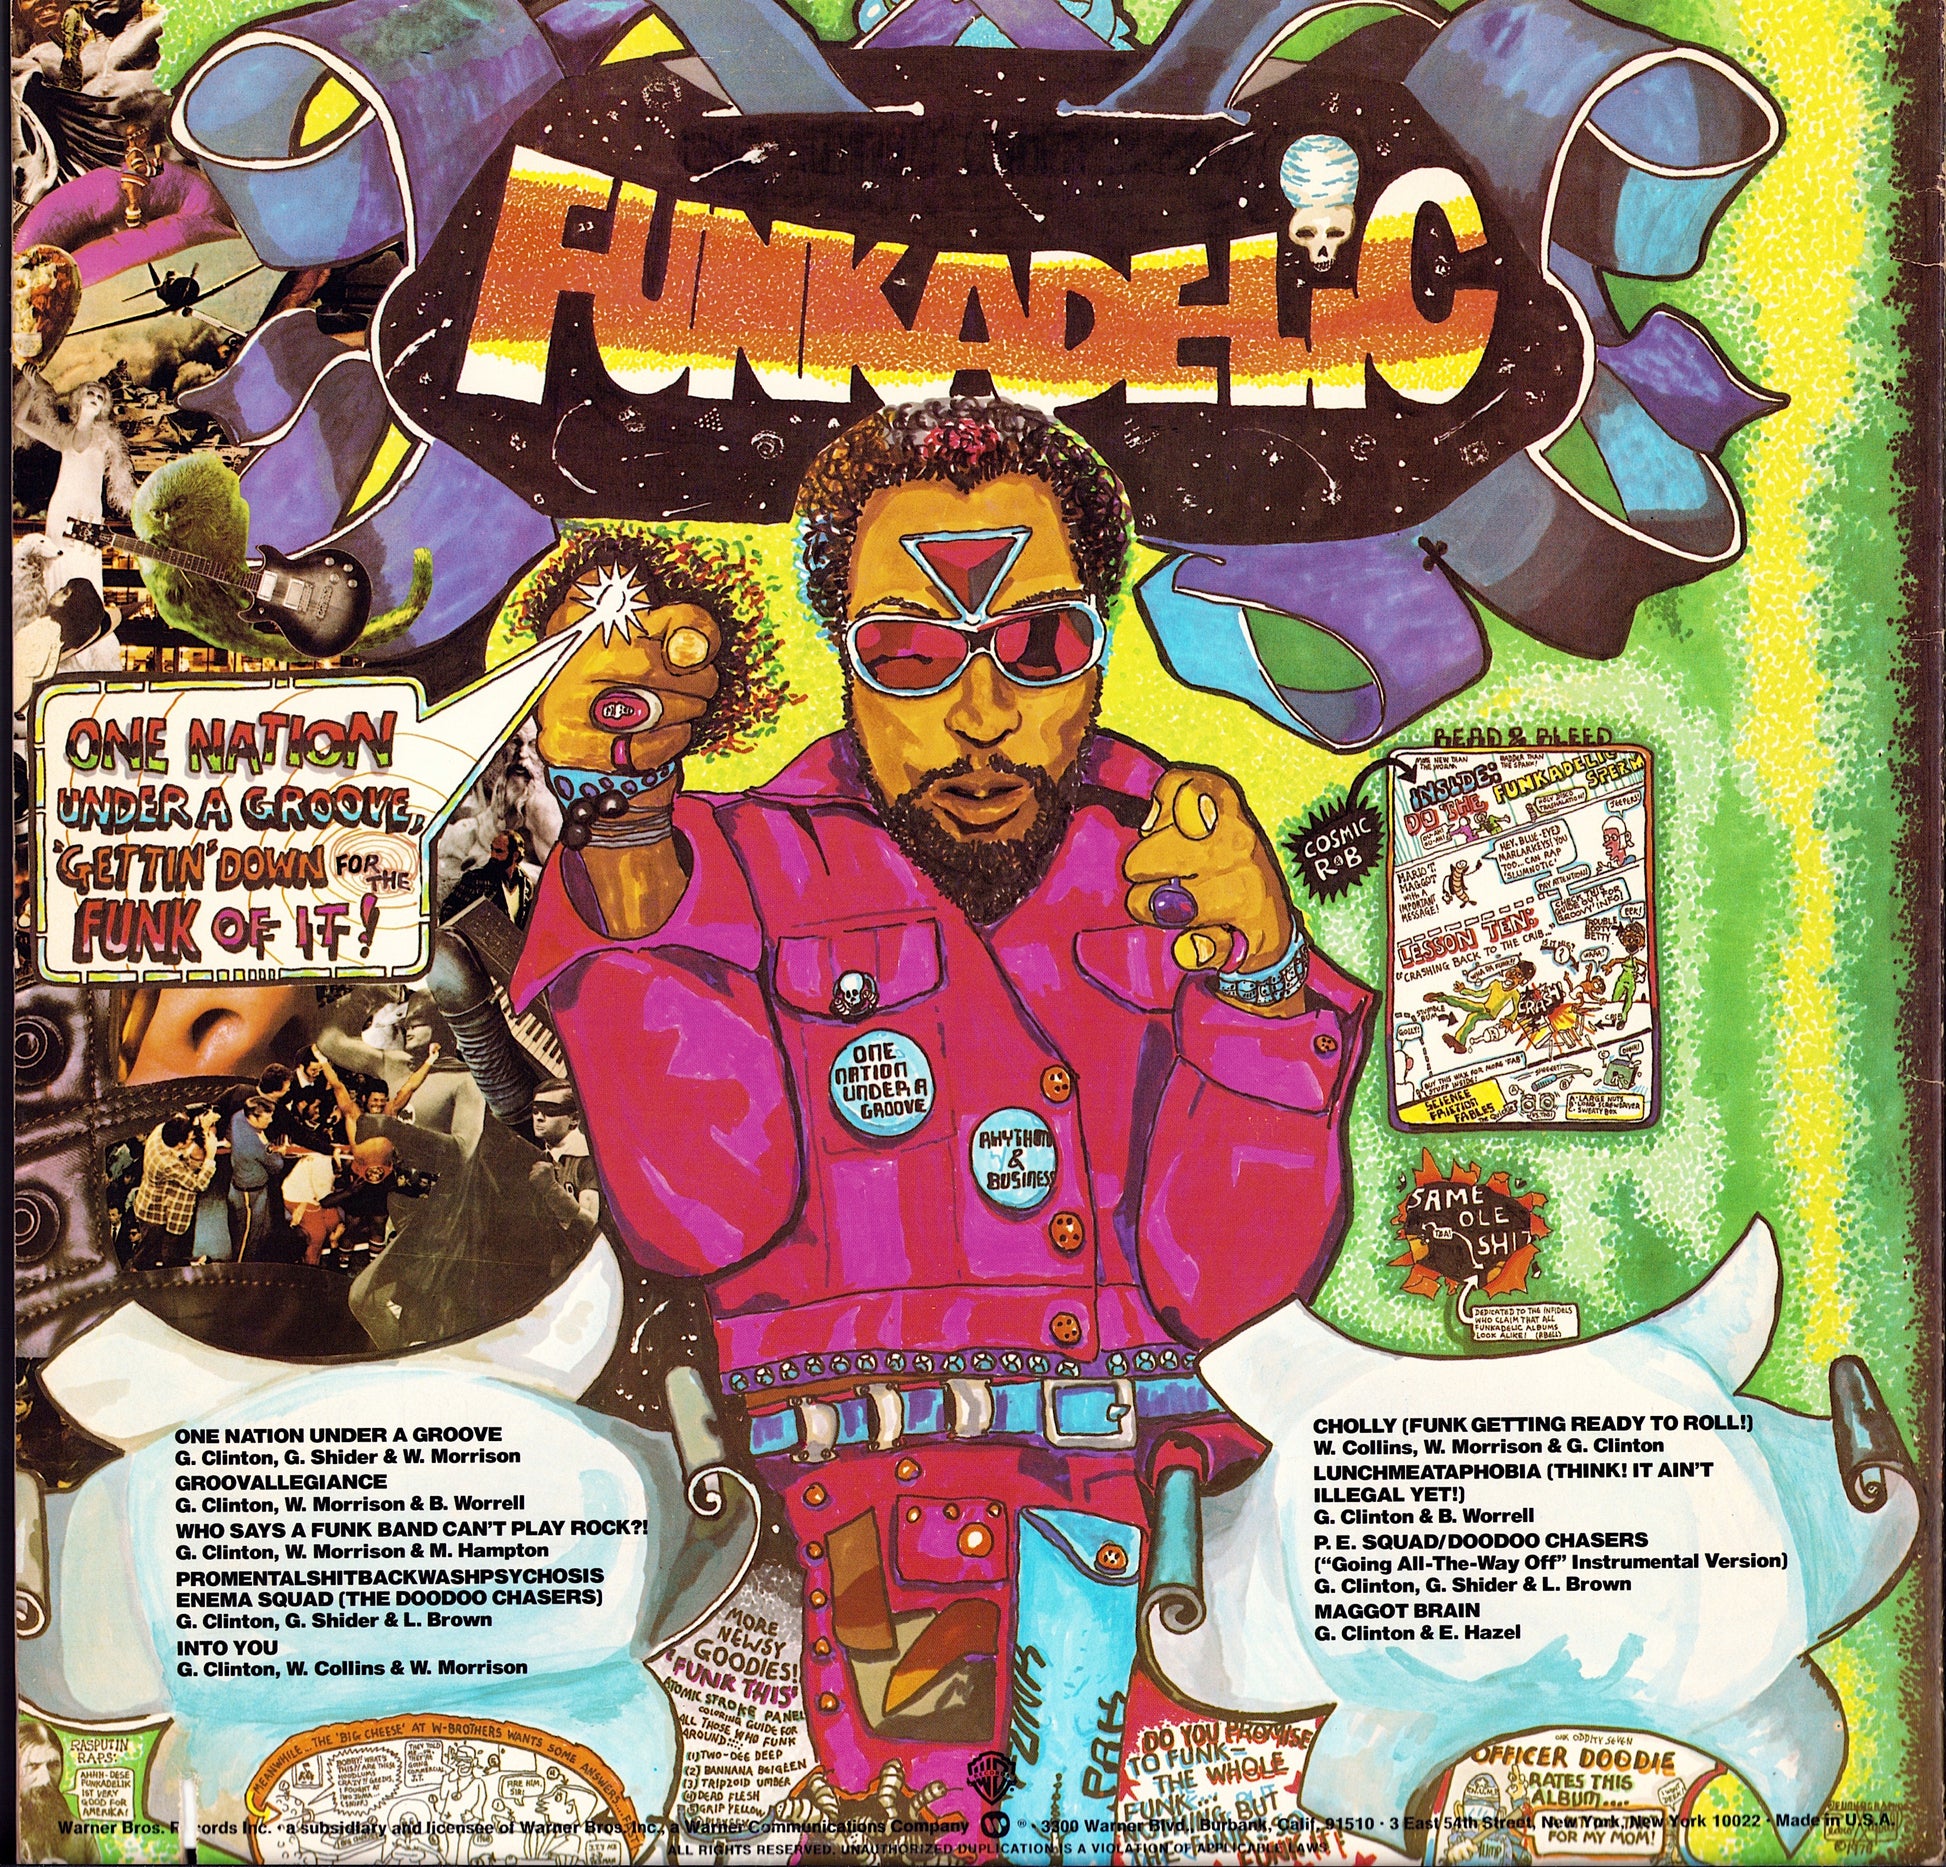 Funkadelic - One Nation Under A Groove Vinyl LP + 7" EP